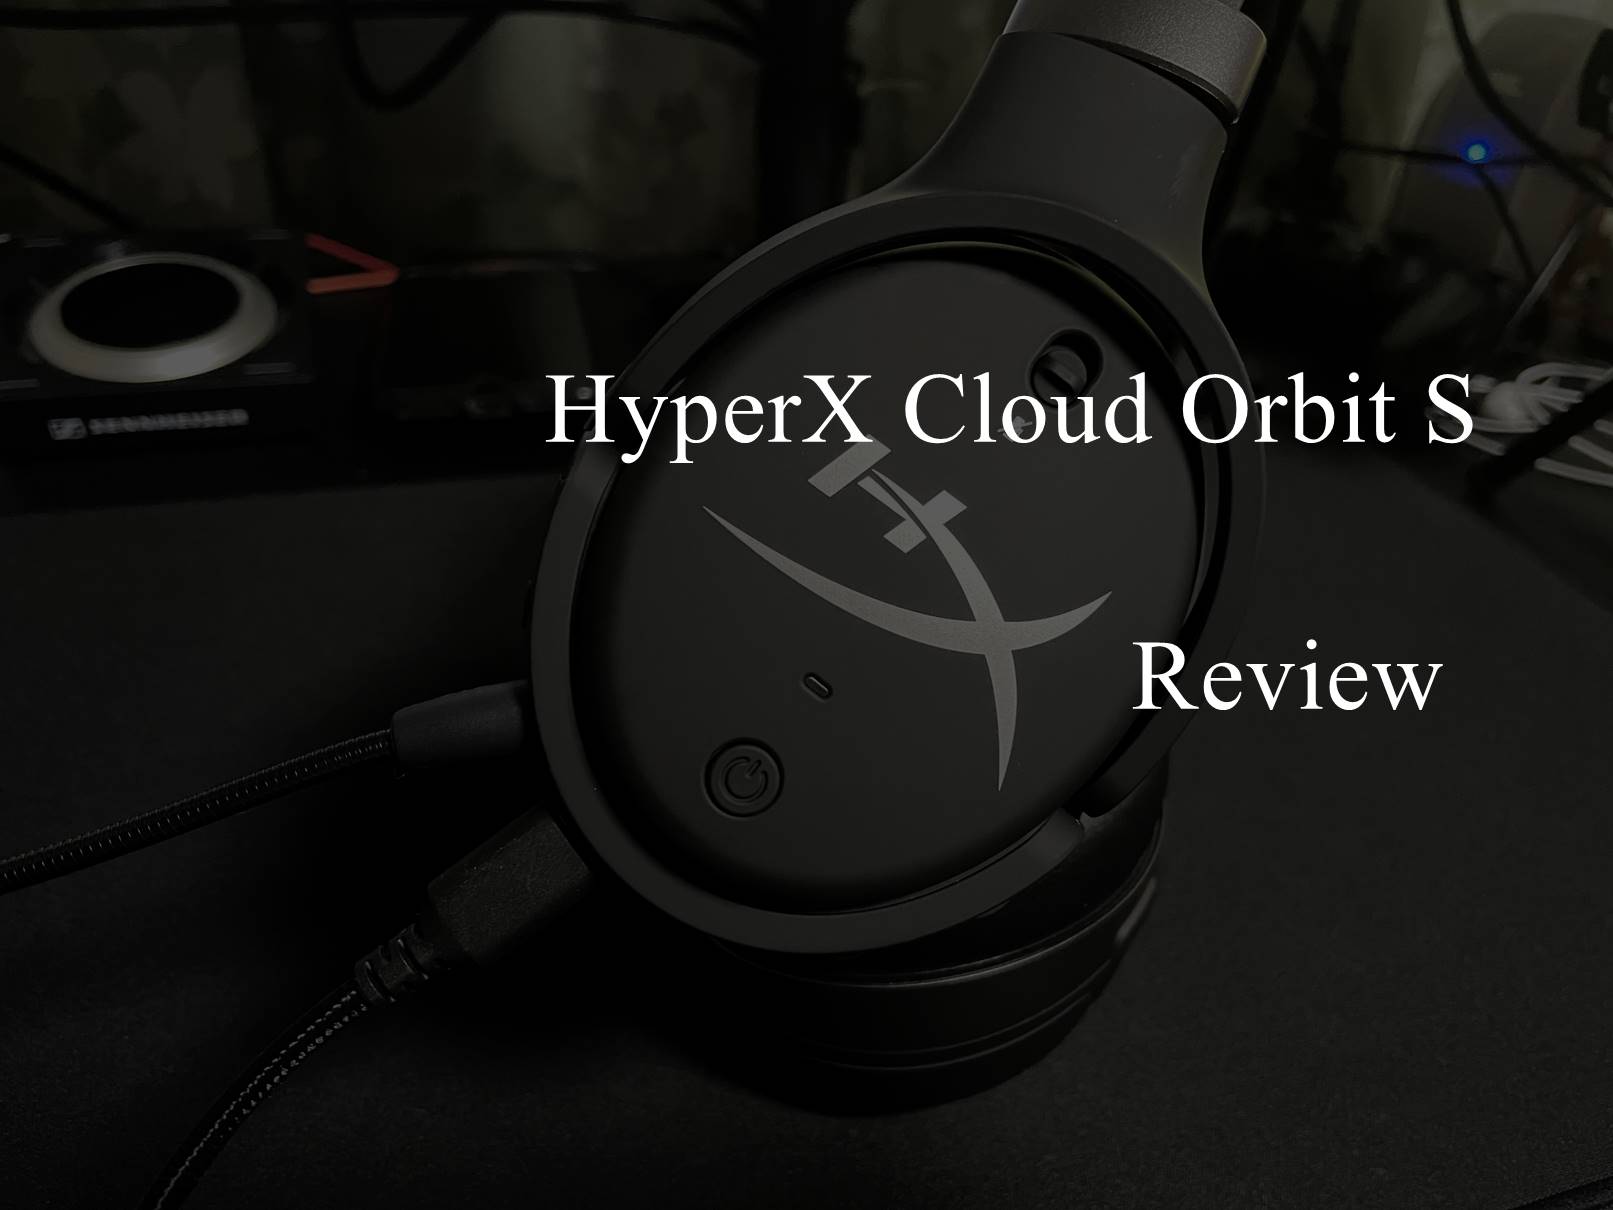 HyperX Cloud Orbit Sレビュー:高額ゲーミングヘッドセットの実力を 